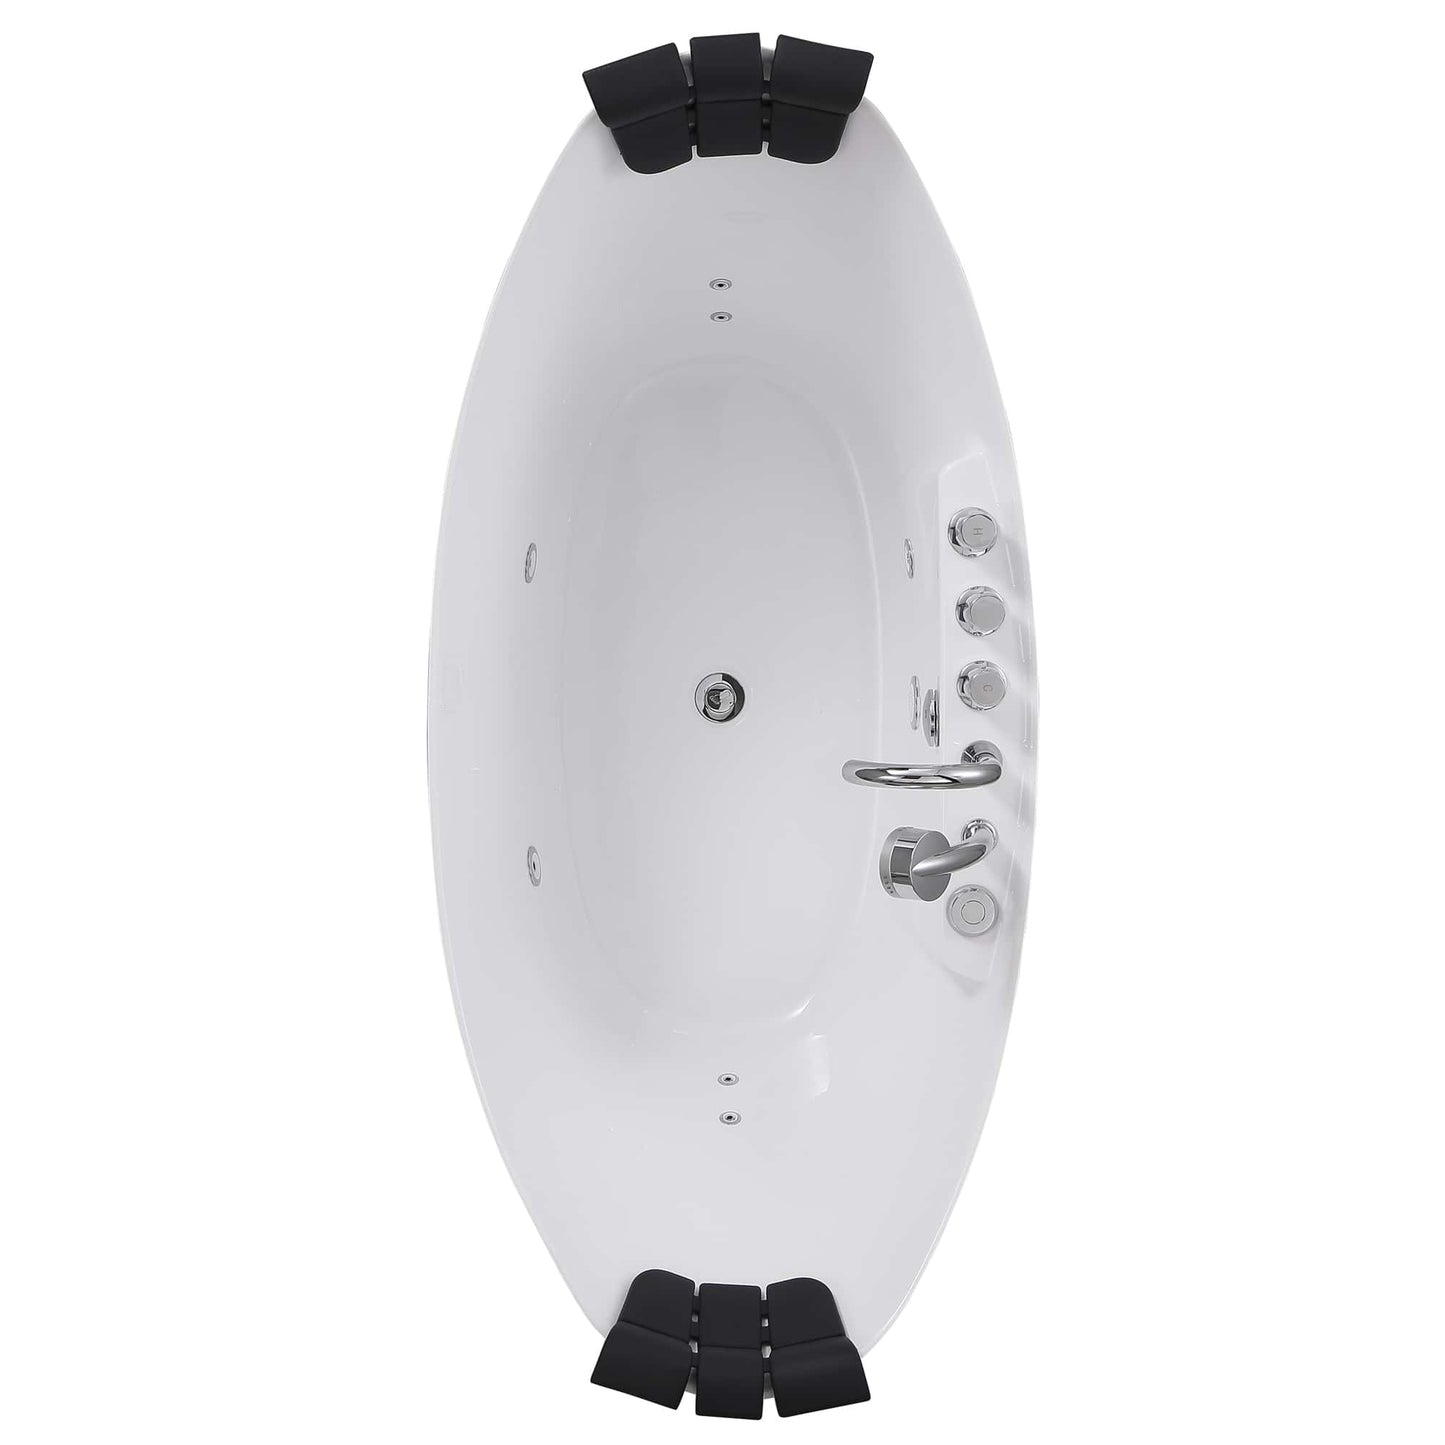 Empava 59" White Freestanding Oval Whirlpool Bathtub - 59AIS11